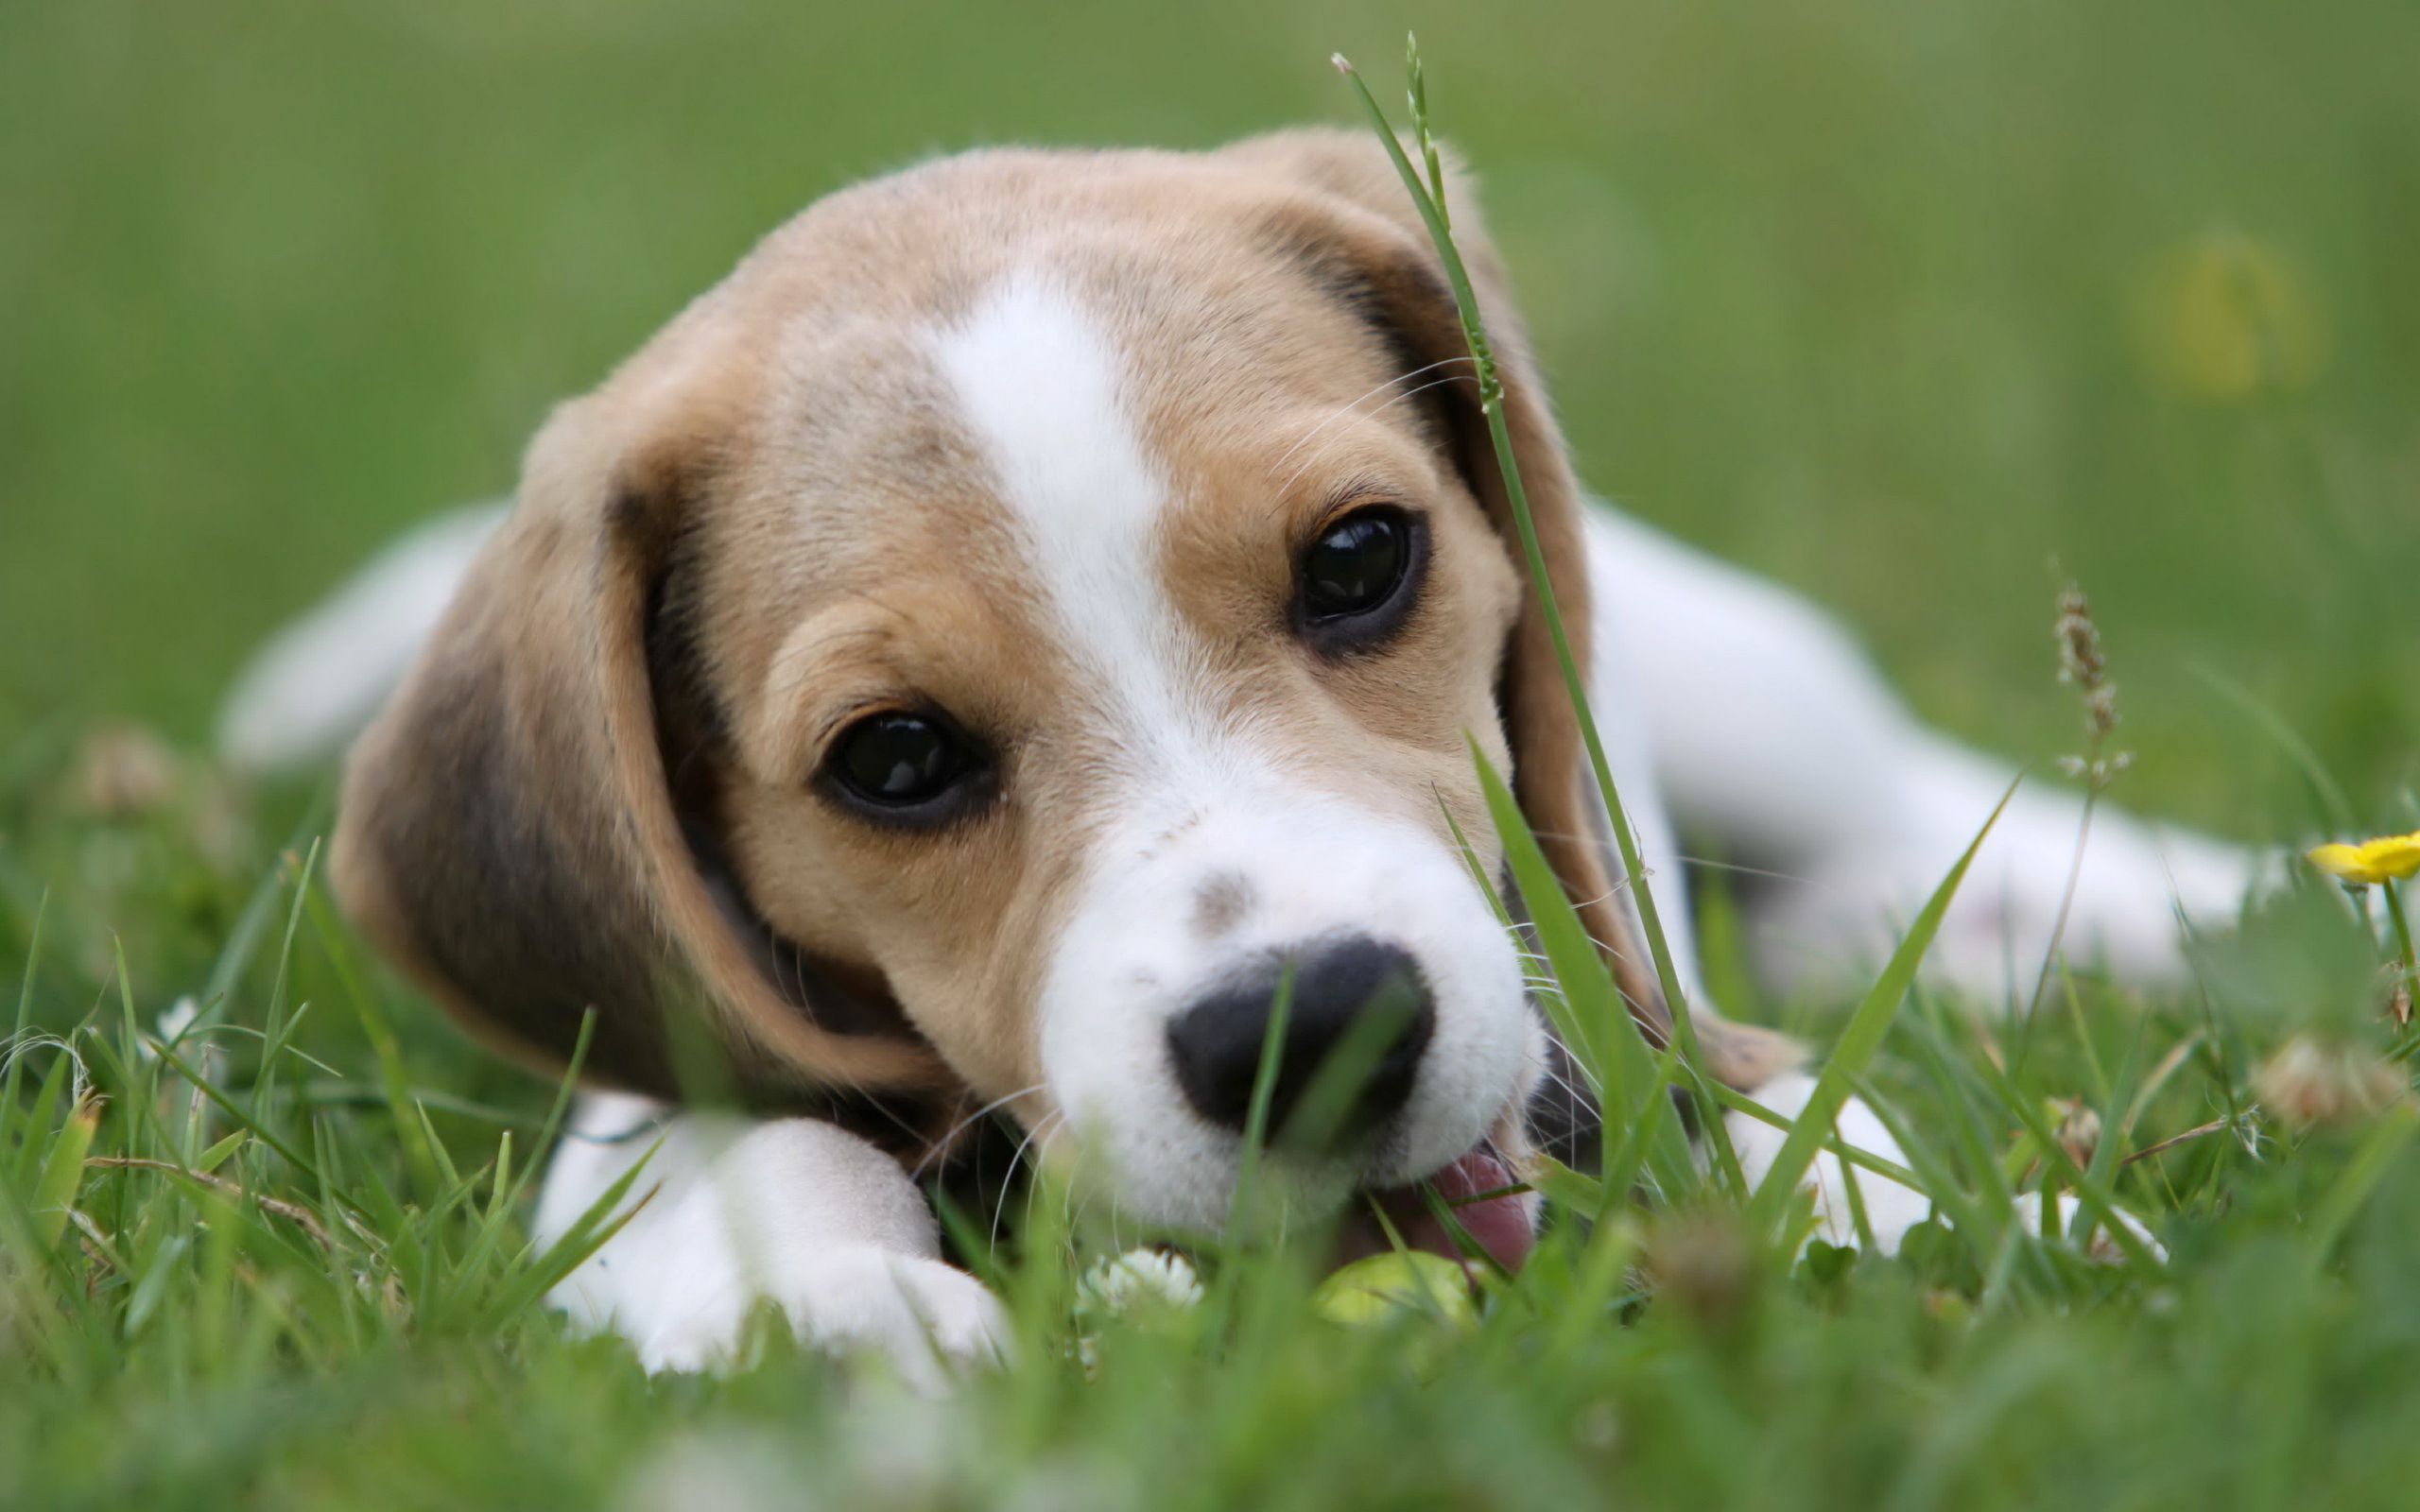 Top Beagle Puppy Picture In 4k Ultra Hd - ビーグル 犬 画像 フリー , HD Wallpaper & Backgrounds